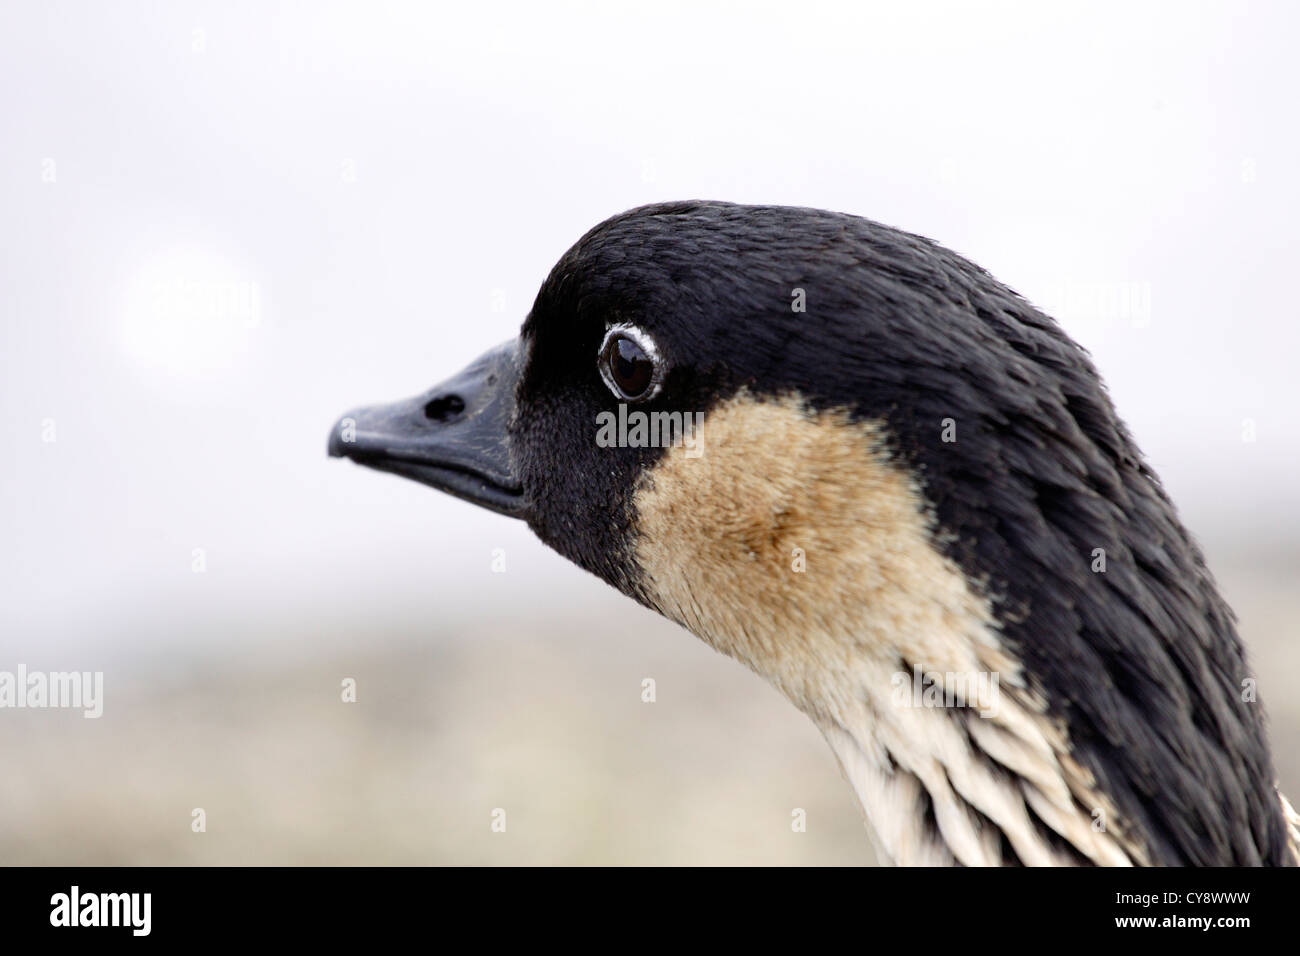 A portrait of a Hawaiian Goose,or NeNe. Stock Photo